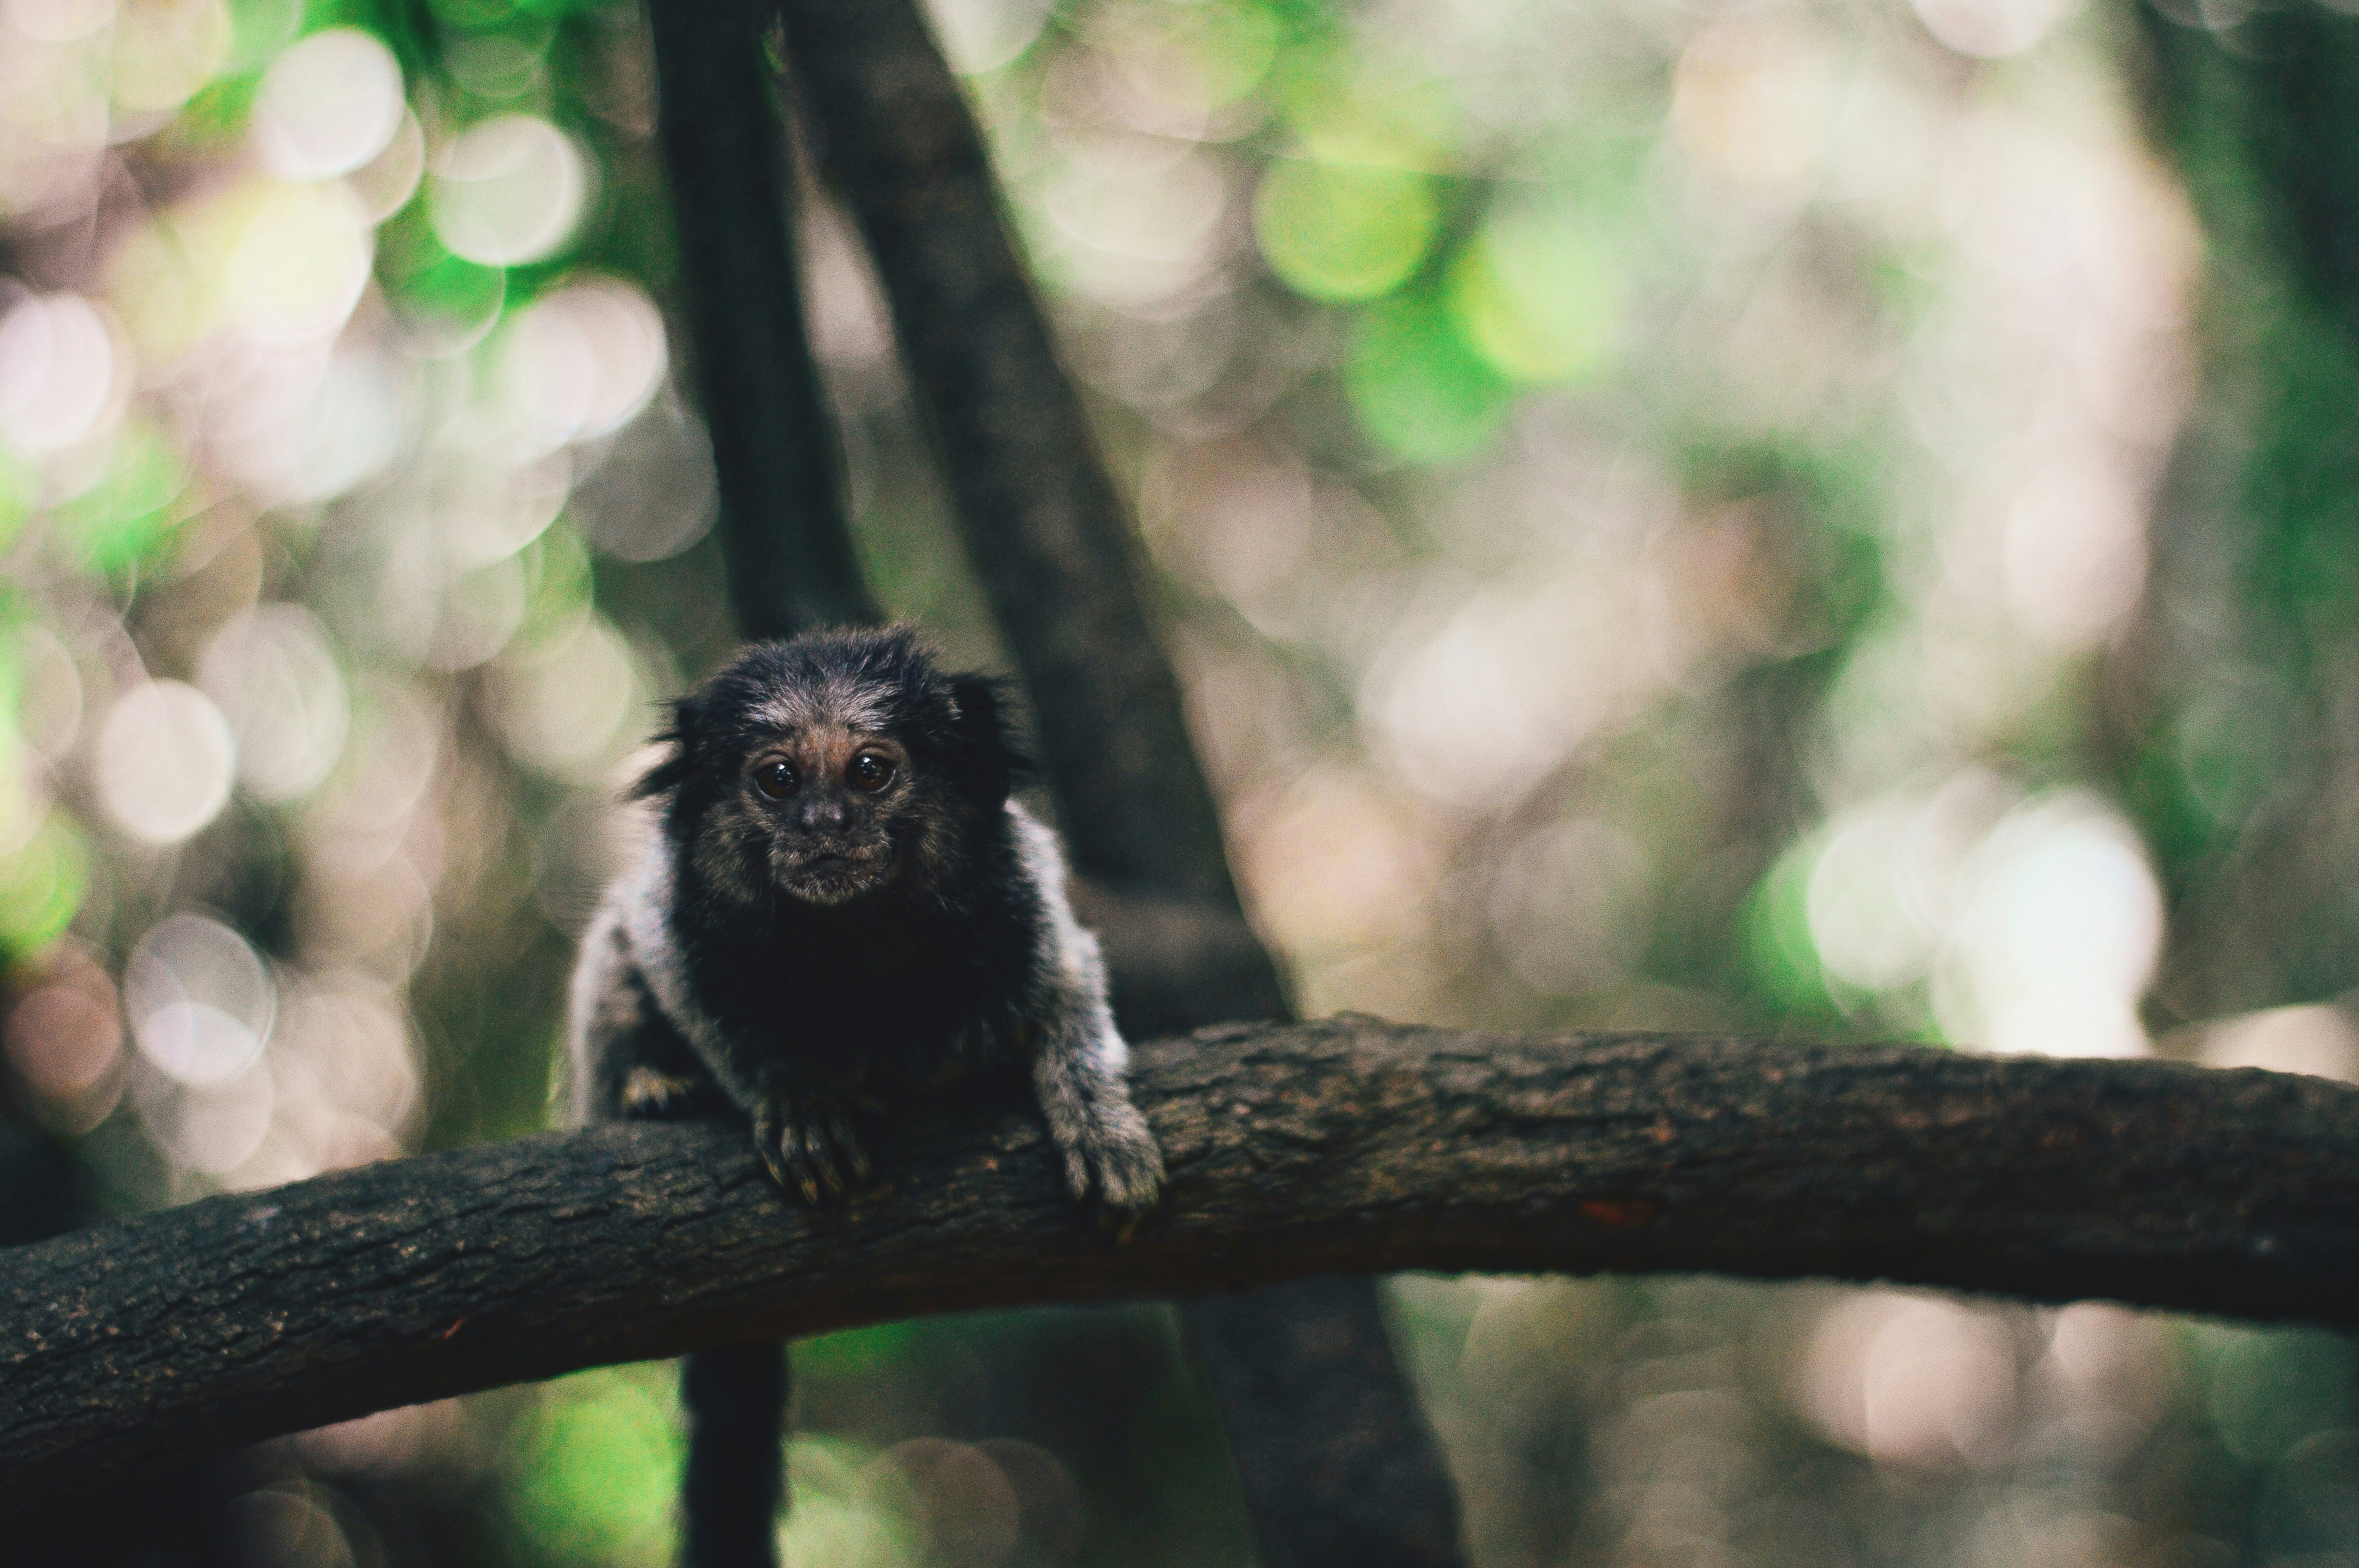 shallow focus photography of black monkey sitting on black tree branch